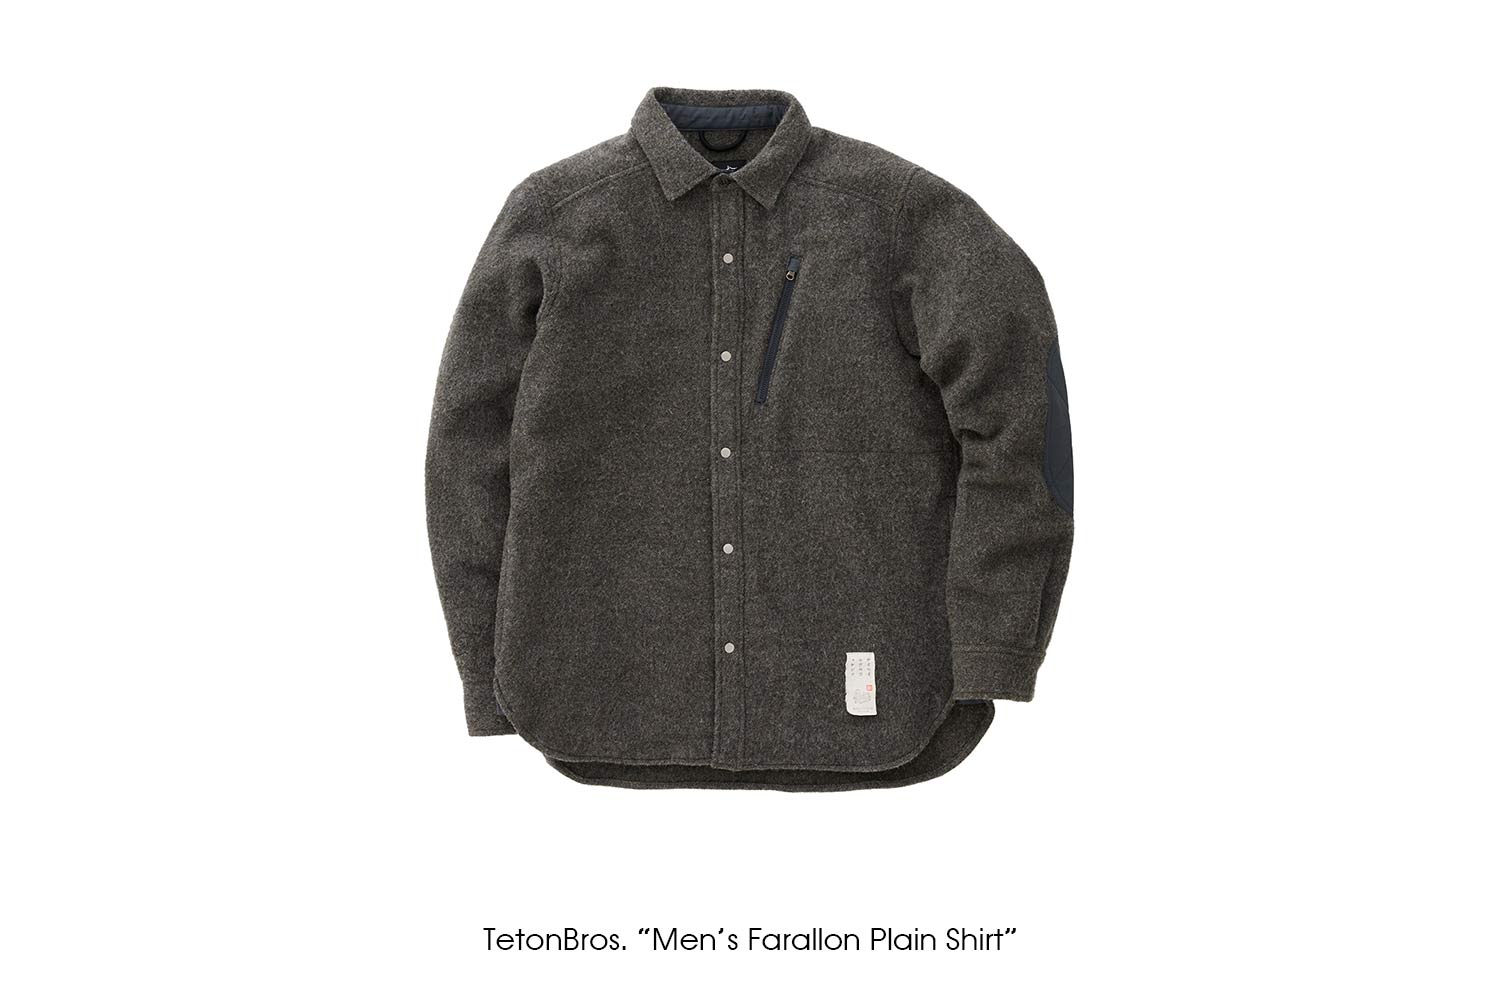 TetonBros. "Men's Farallon Plain Shirt"